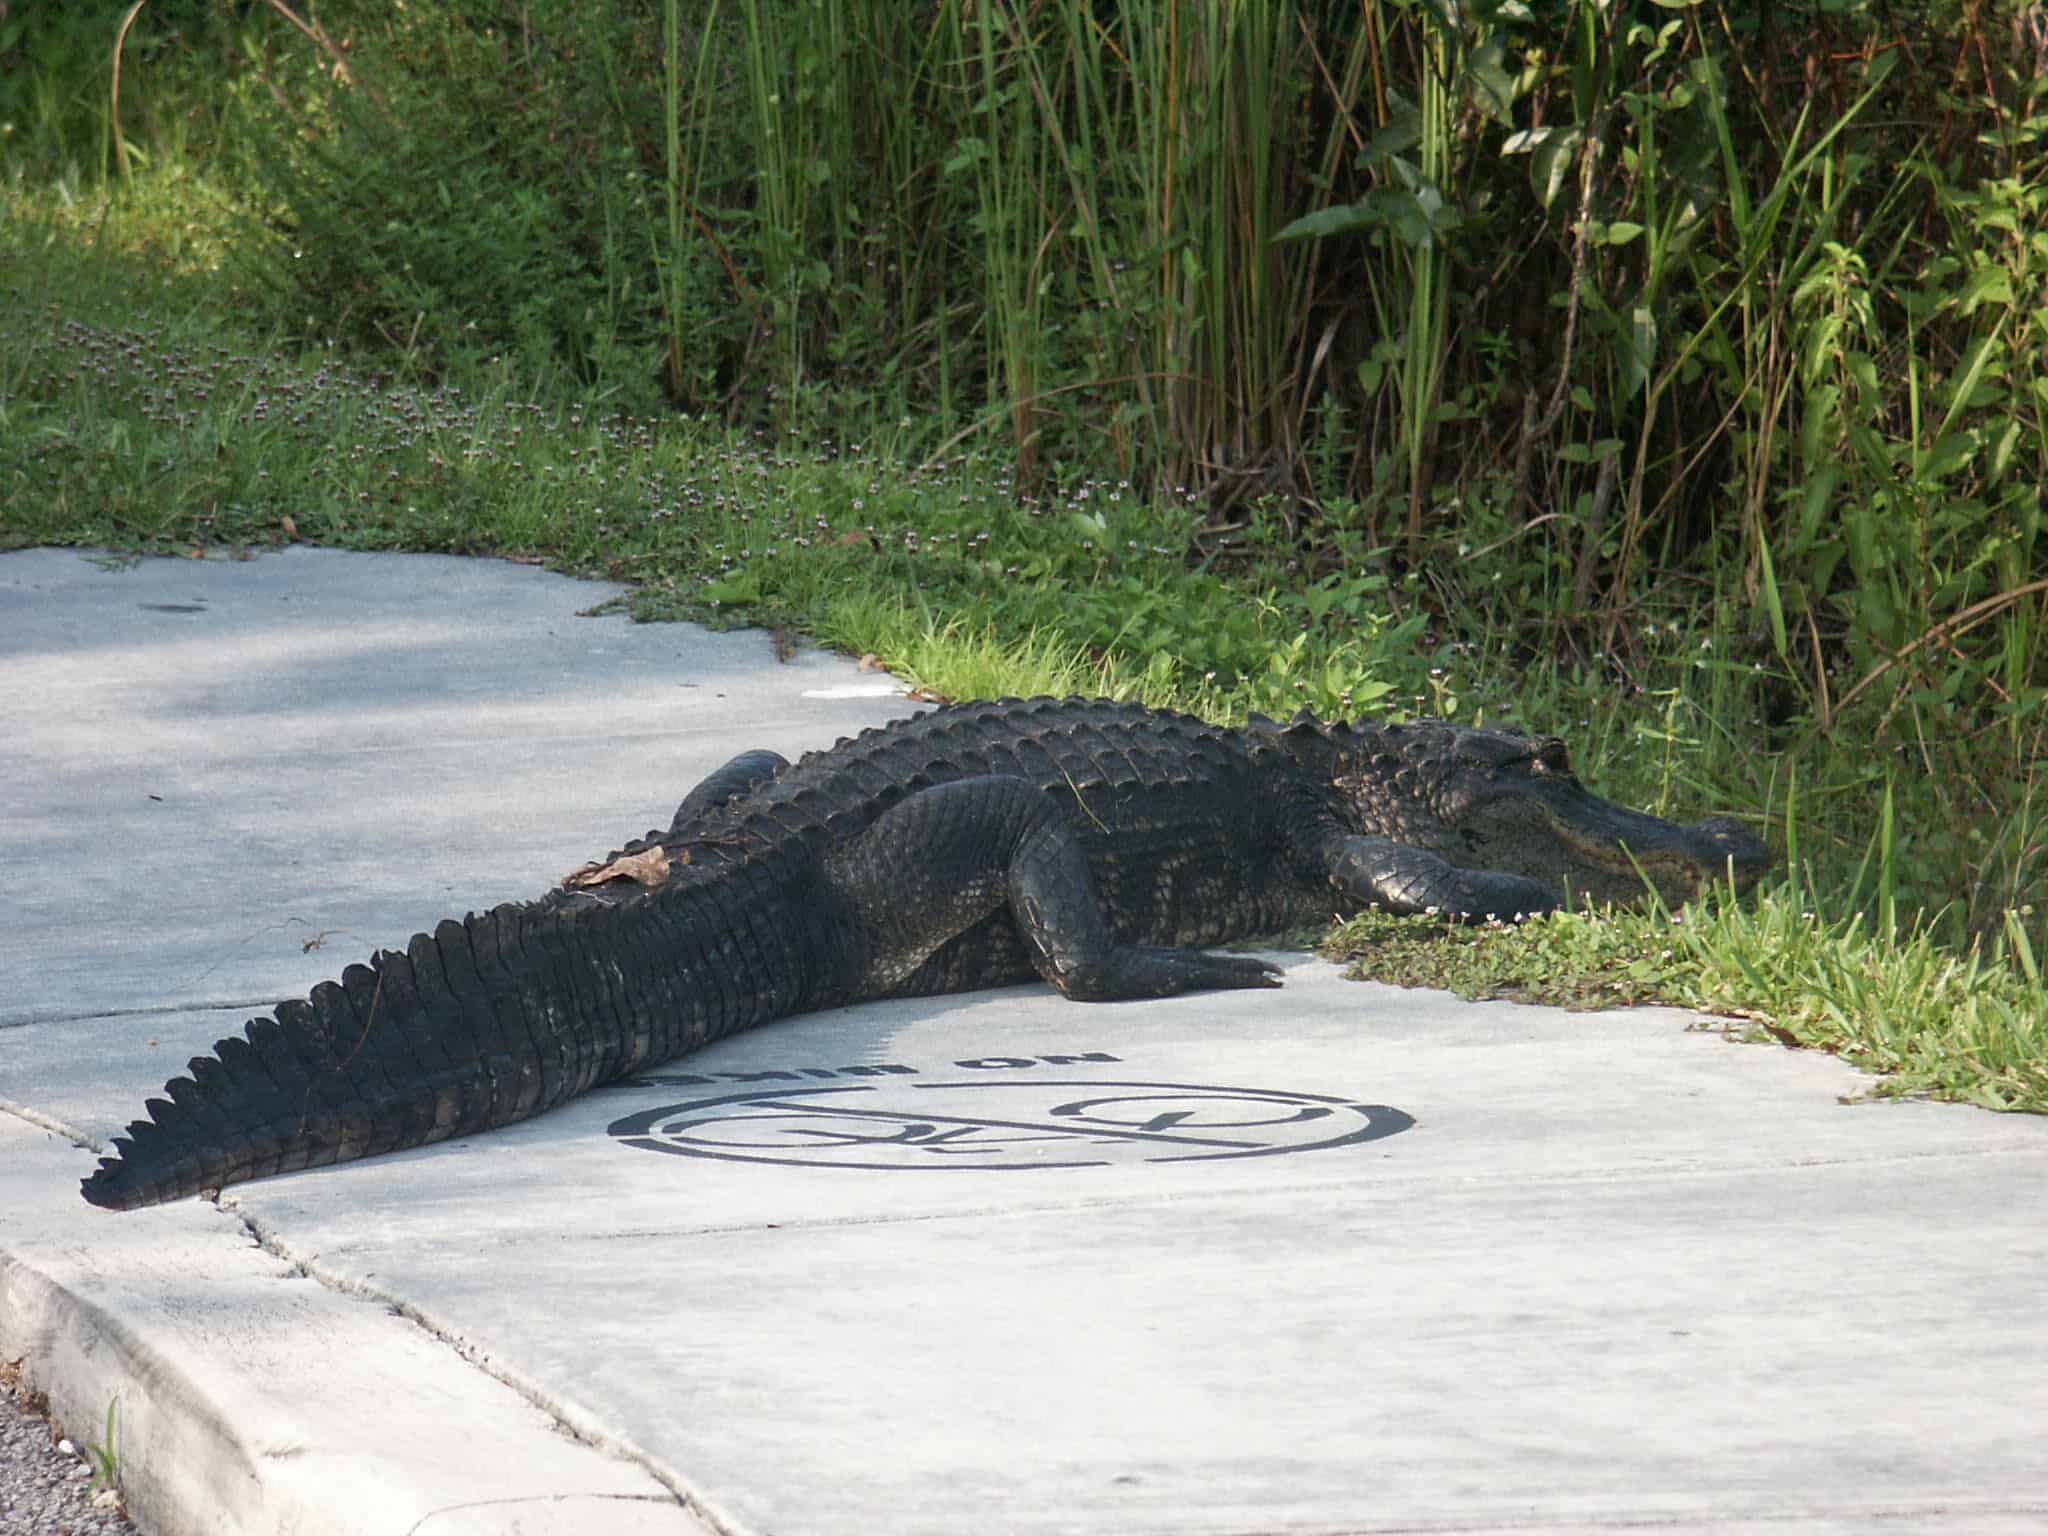 Alligator on the road